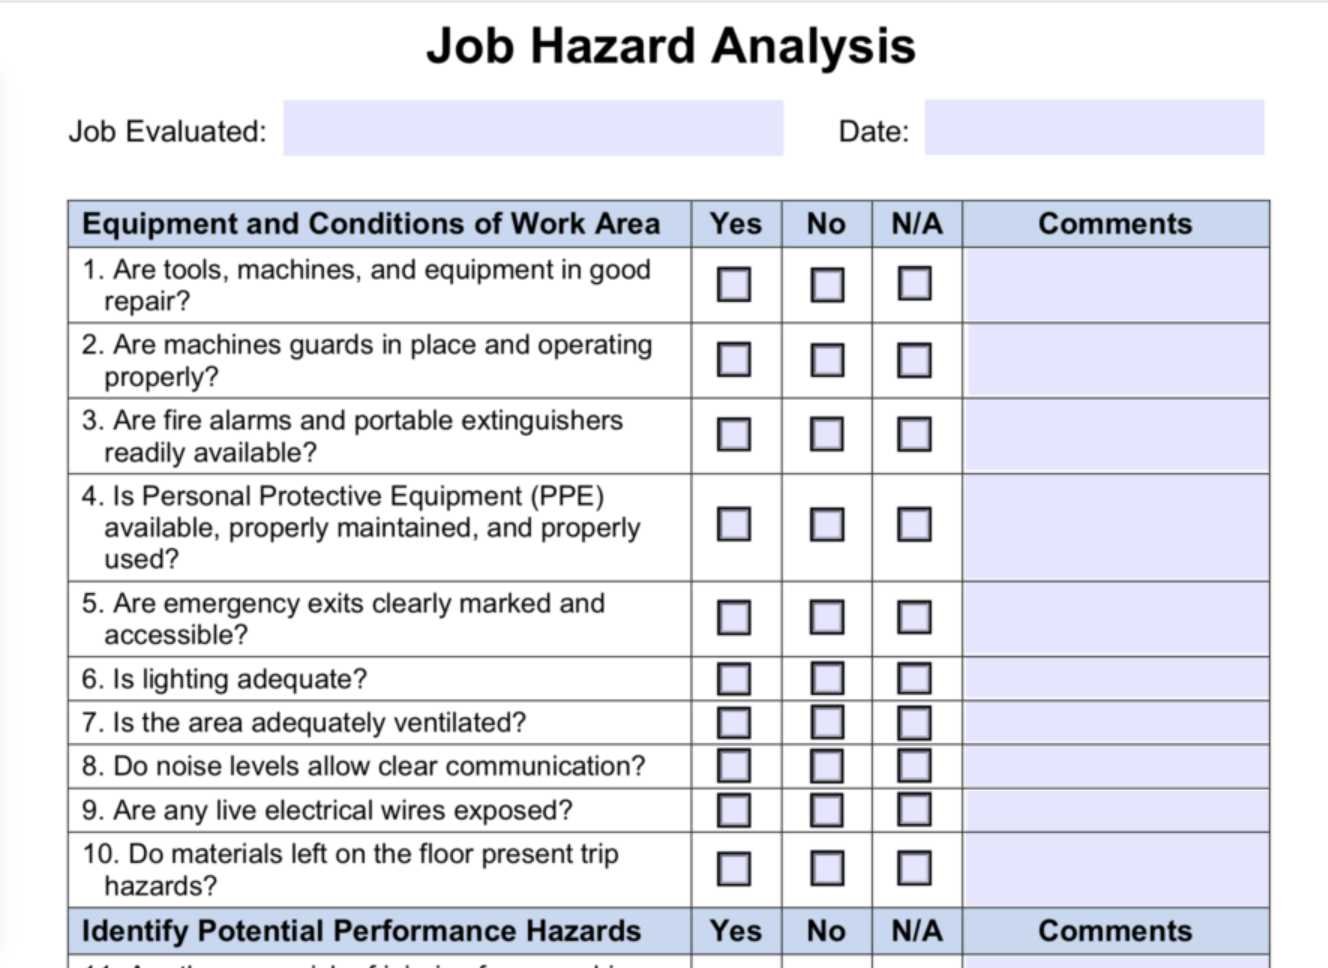 Job Hazard Analysis form with FieldPulse PDF Form filler tool